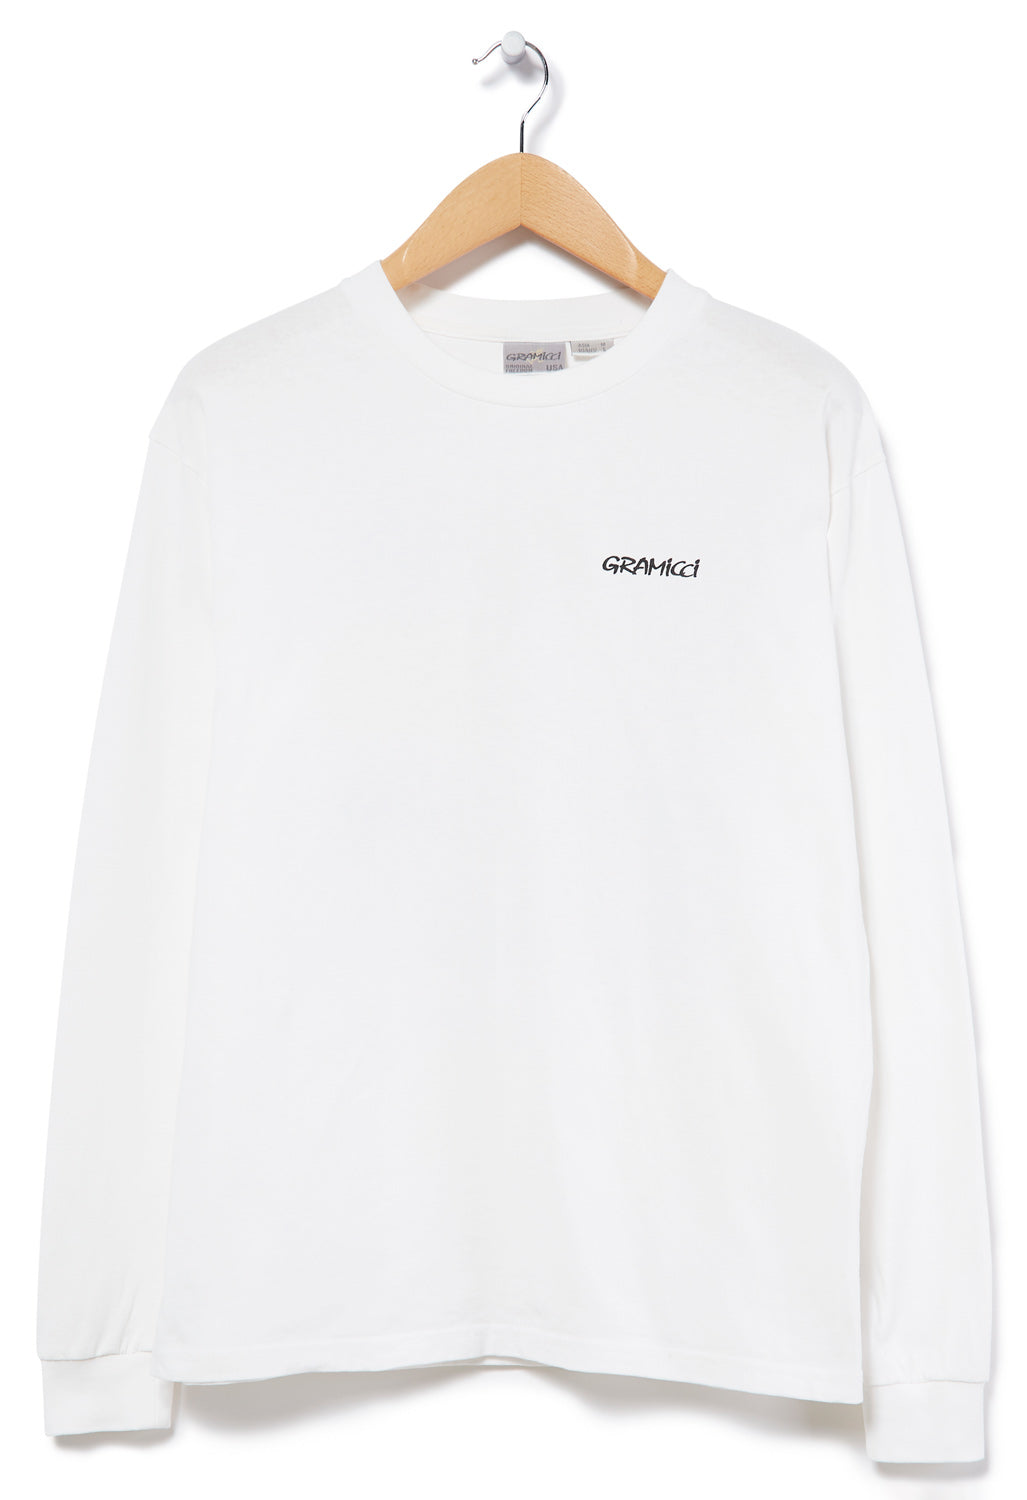 Gramicci Shorts Long Sleeved T-Shirt - White